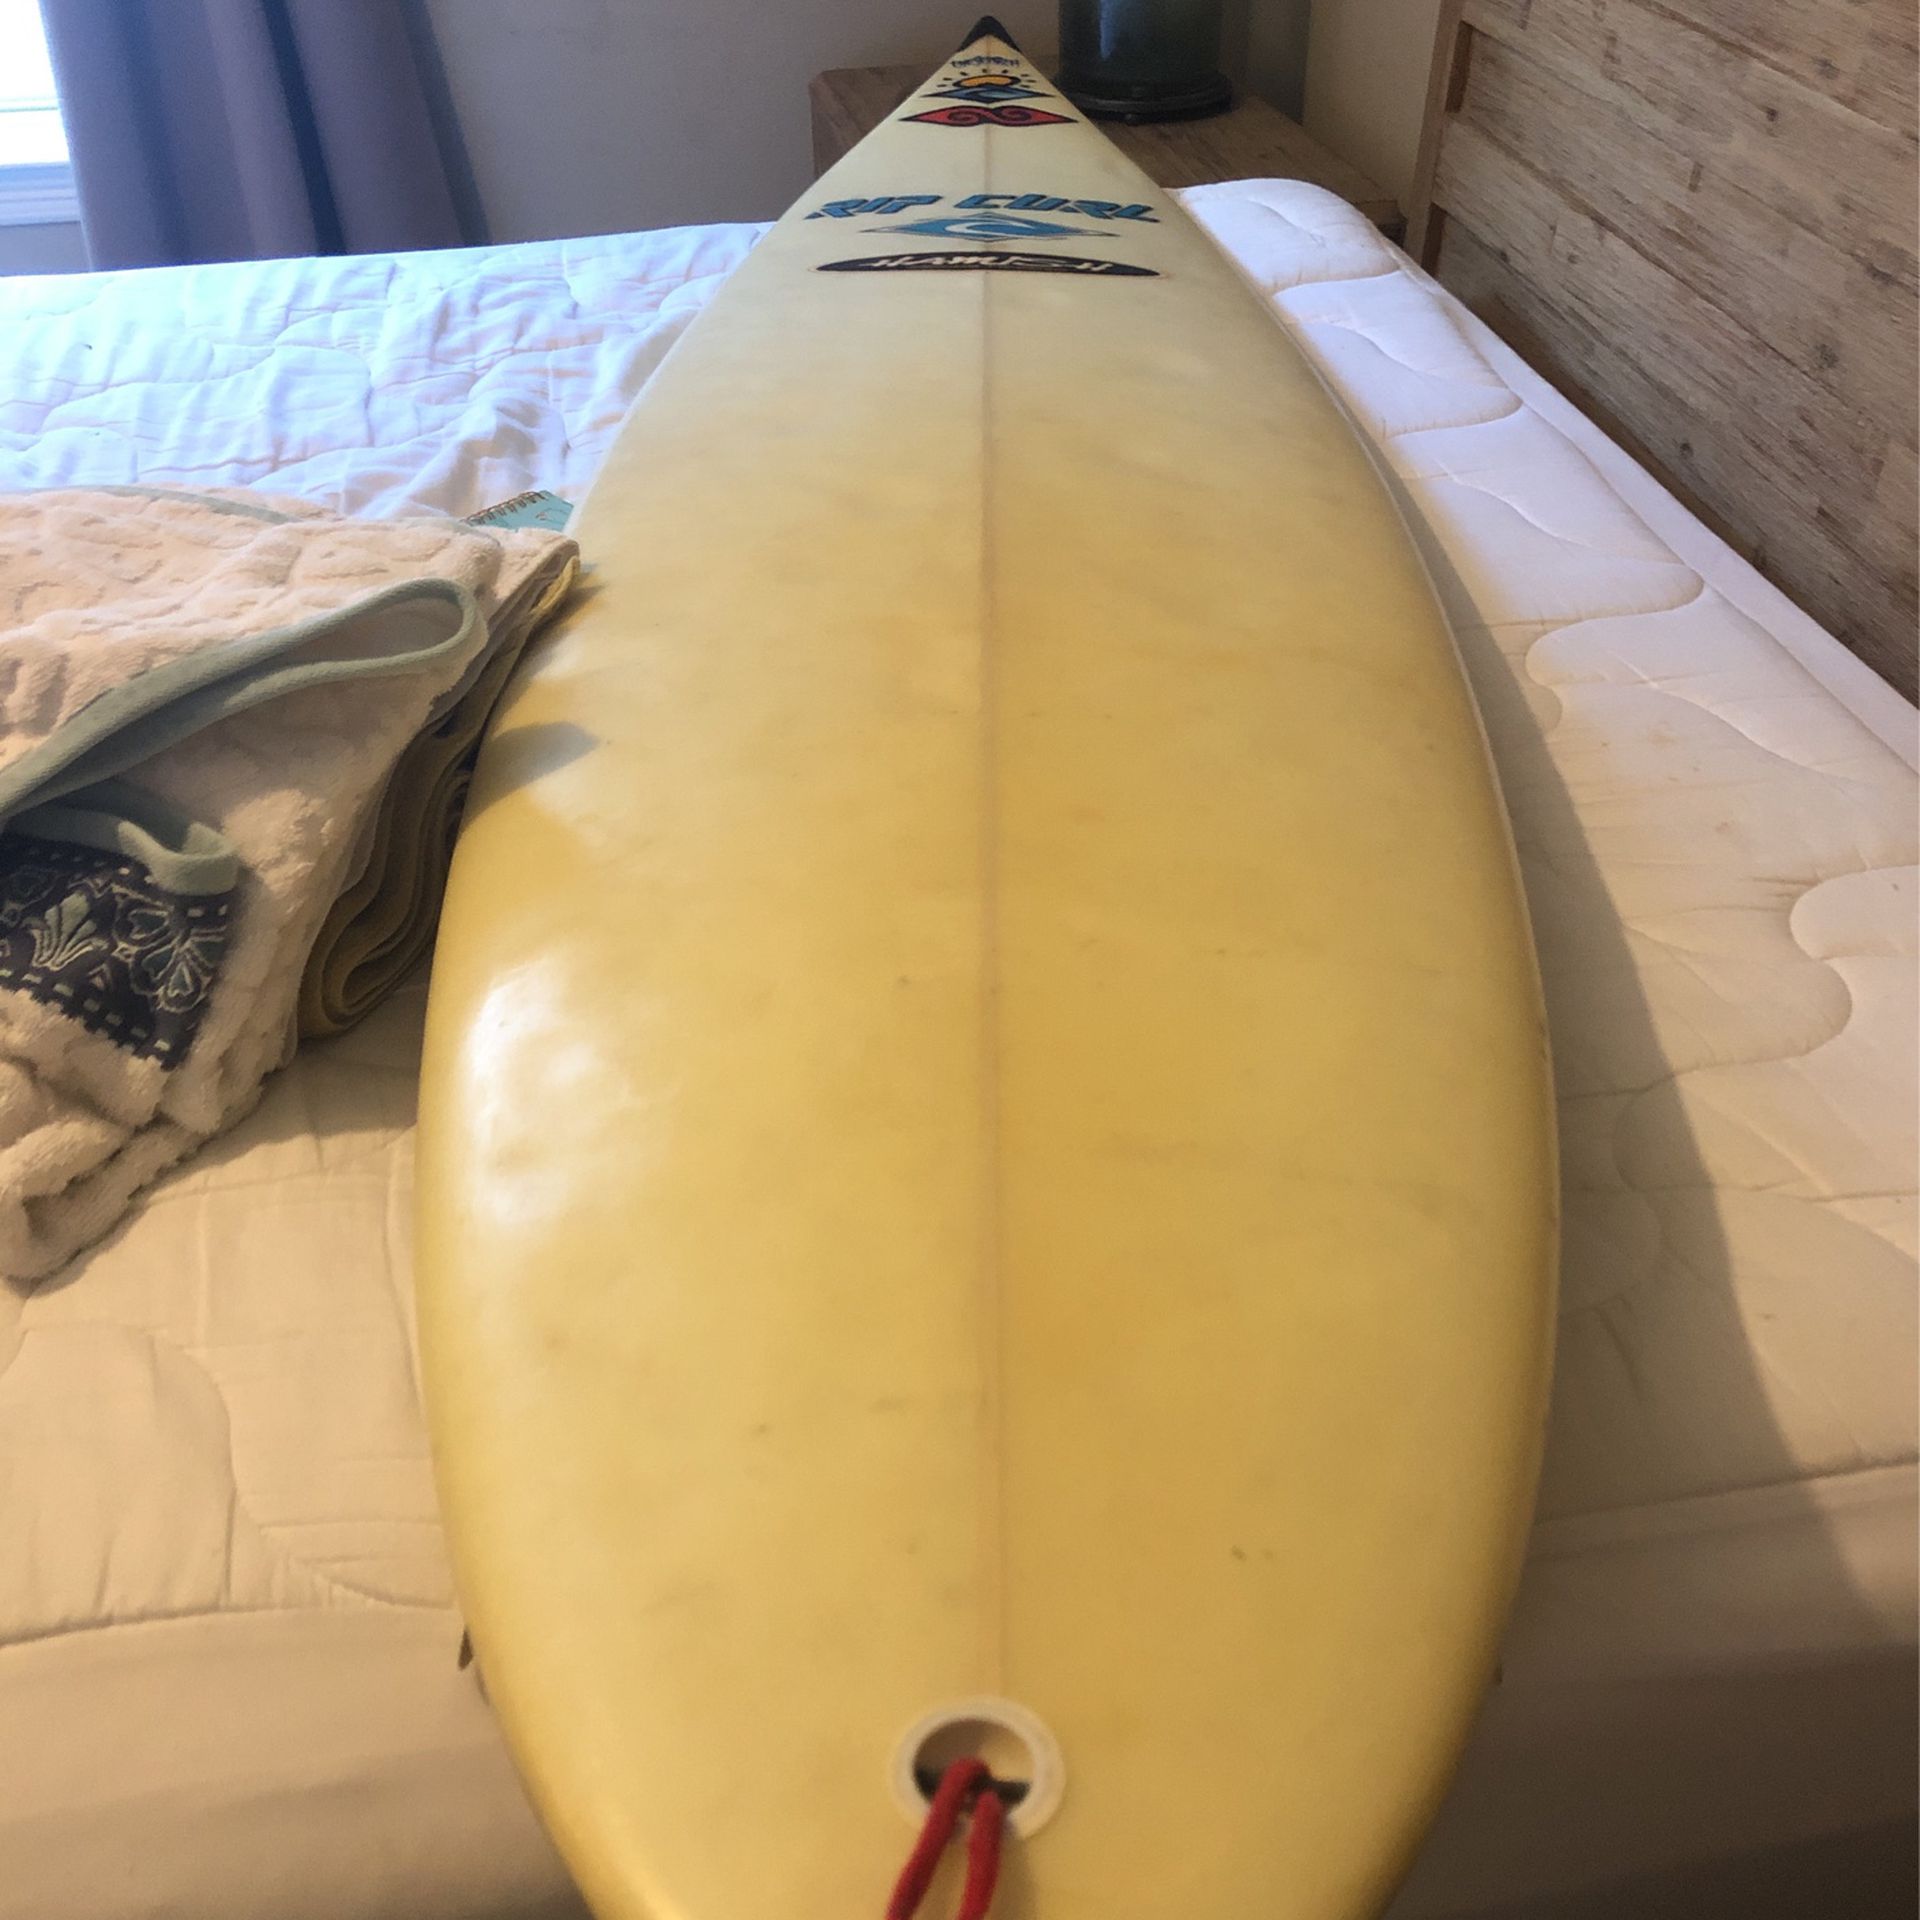 Surfboard, Rip Curl